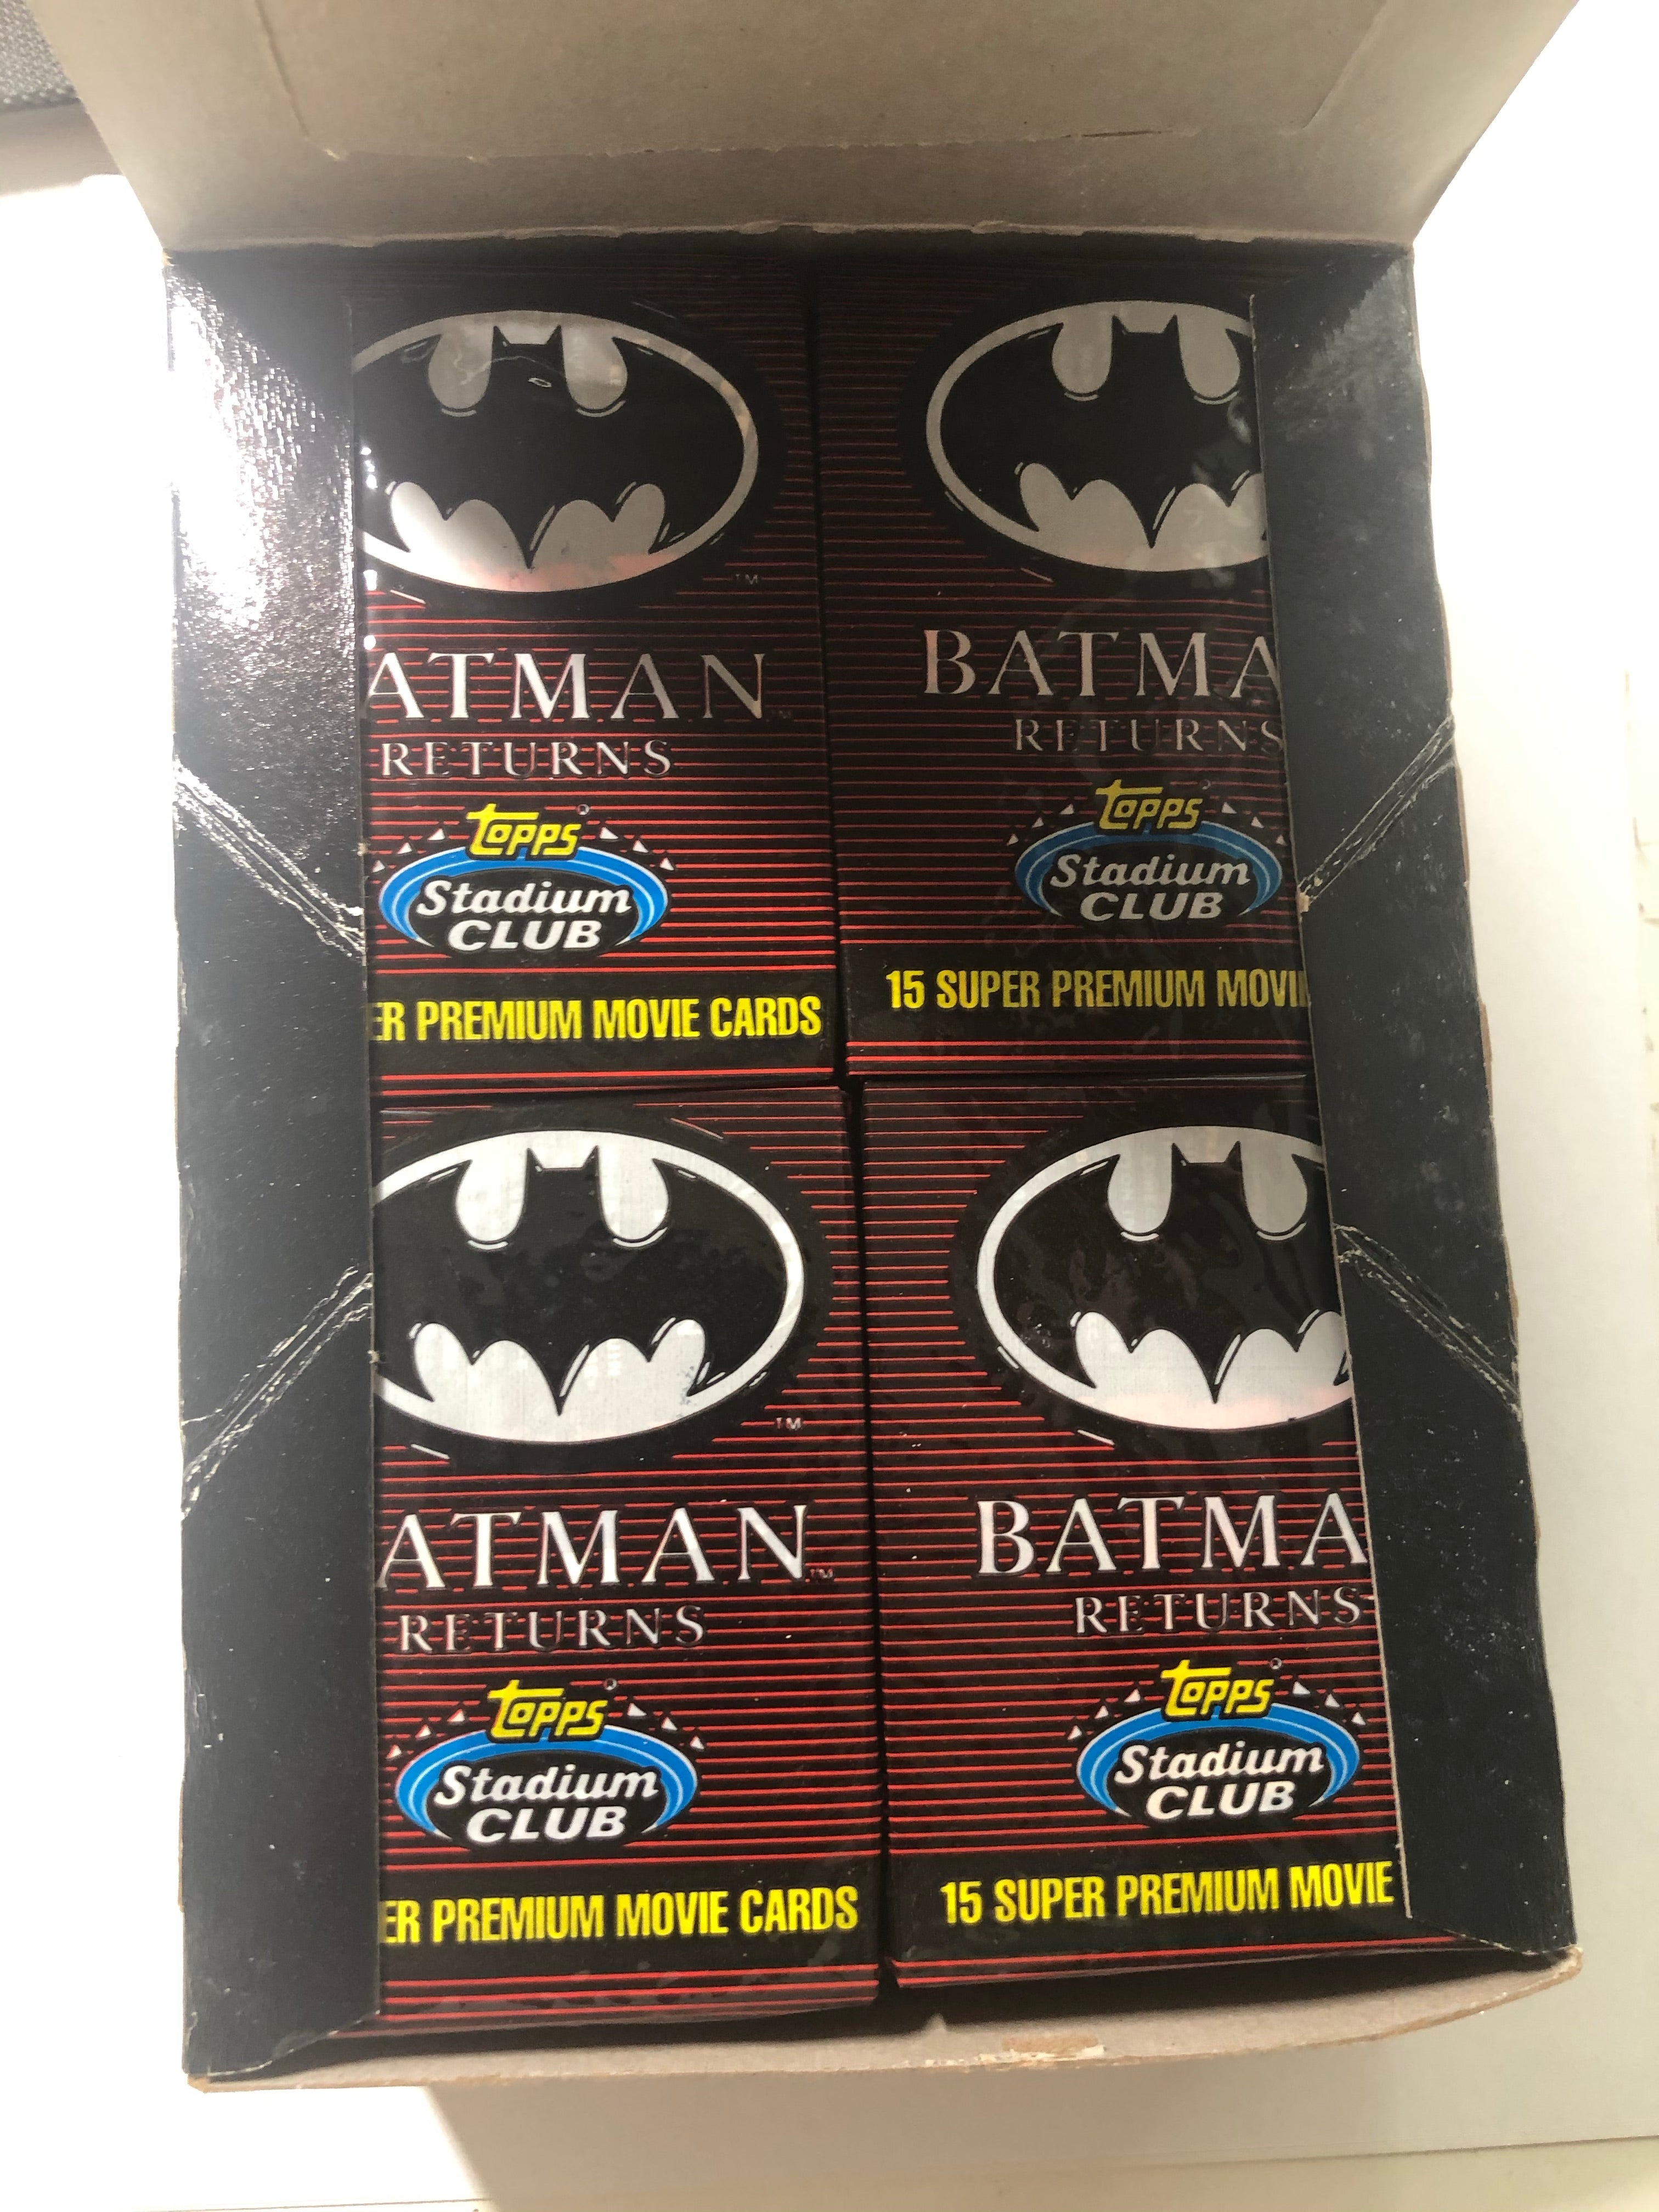 1991 Topps Stadium Club Batman Returns movie cards 36 packs box